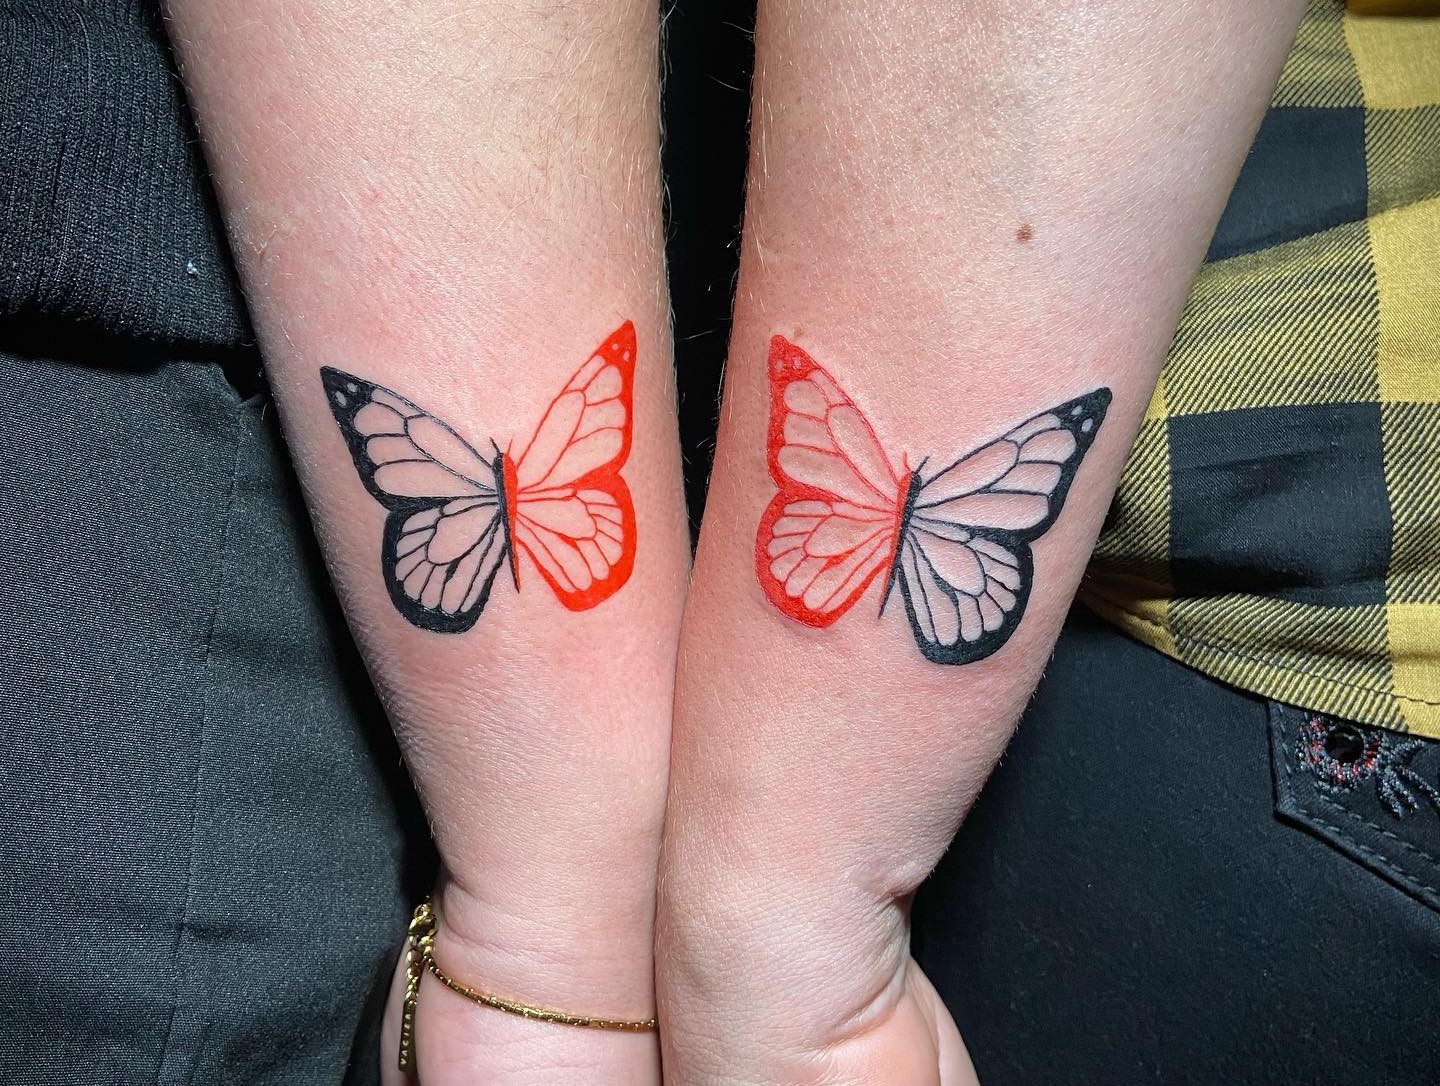 Niece and auntie matching tattoos Tattoo done by Johnny Blaze1tat2  blaze1tat2s inklahomatattoostudio guymonoklahoma cuteandsimple  By  Inklahoma Tattoos Studio  Facebook